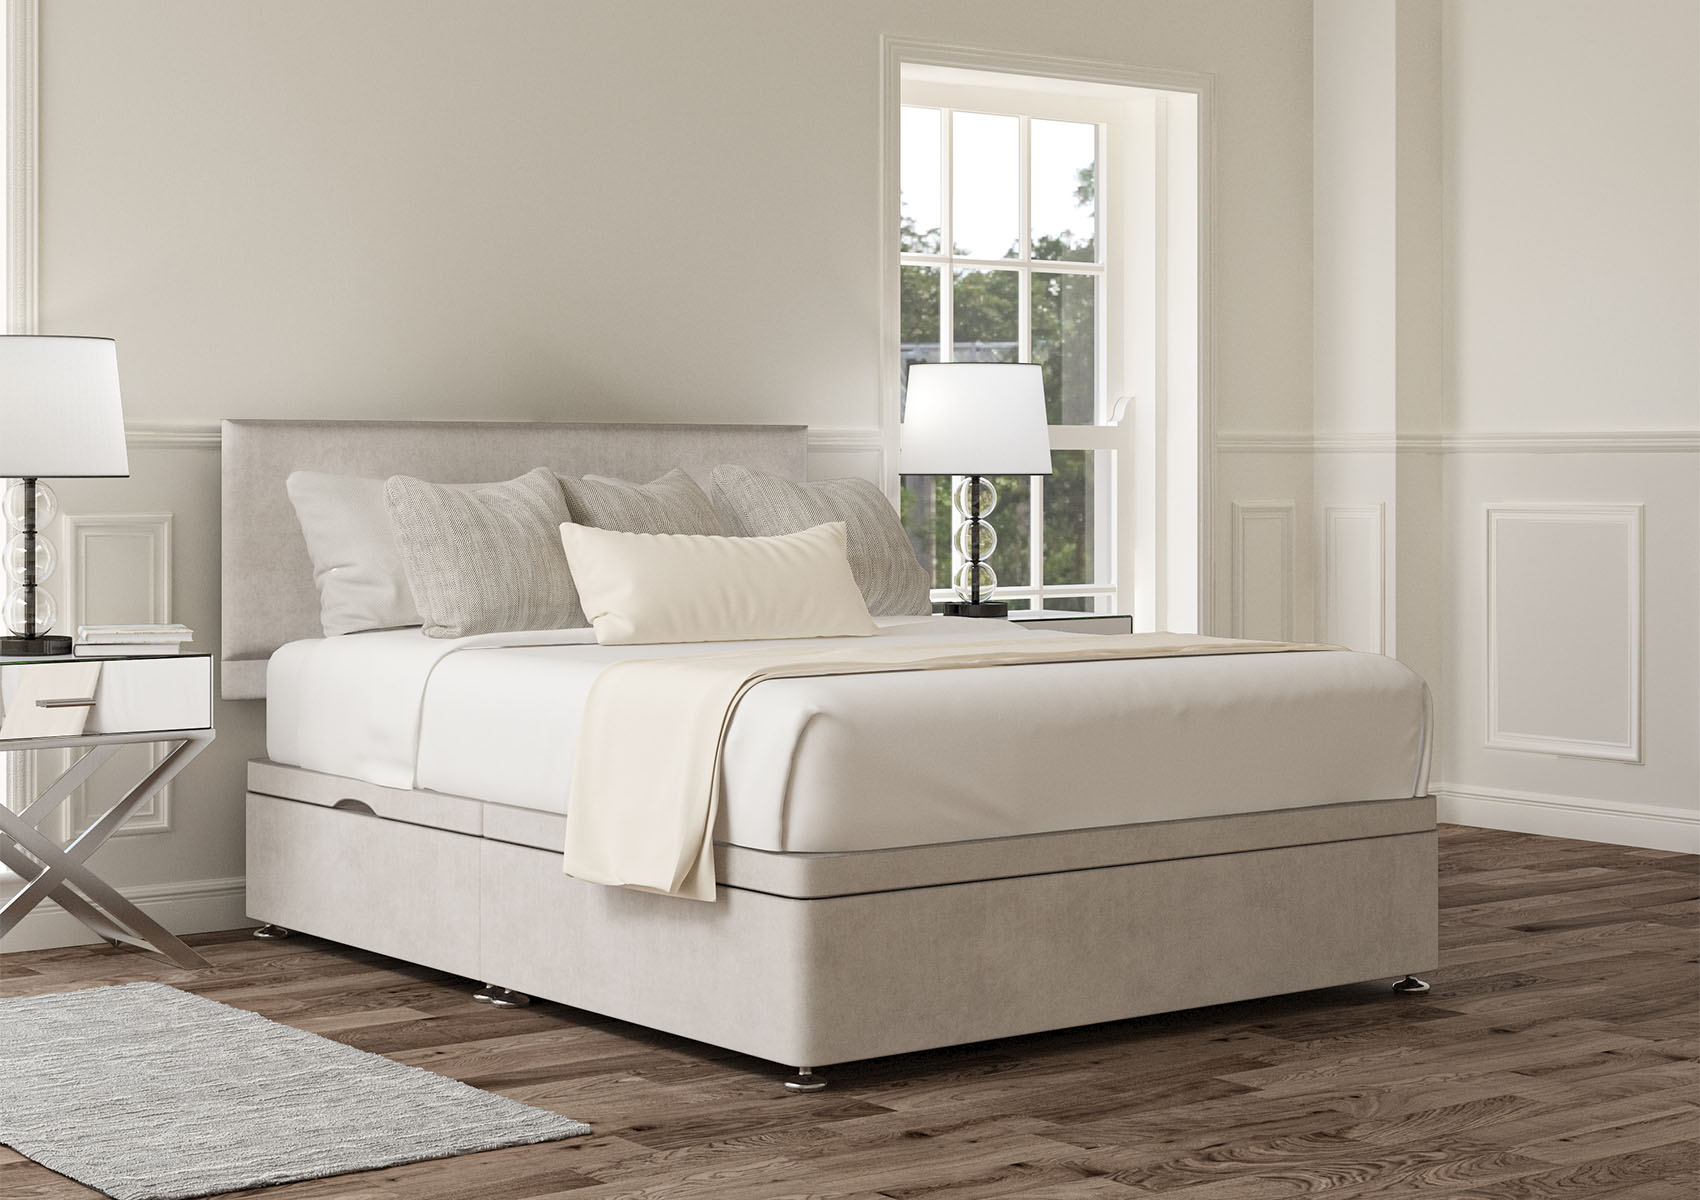 View Henley Siera Denim Upholstered Single Ottoman Bed Time4Sleep information